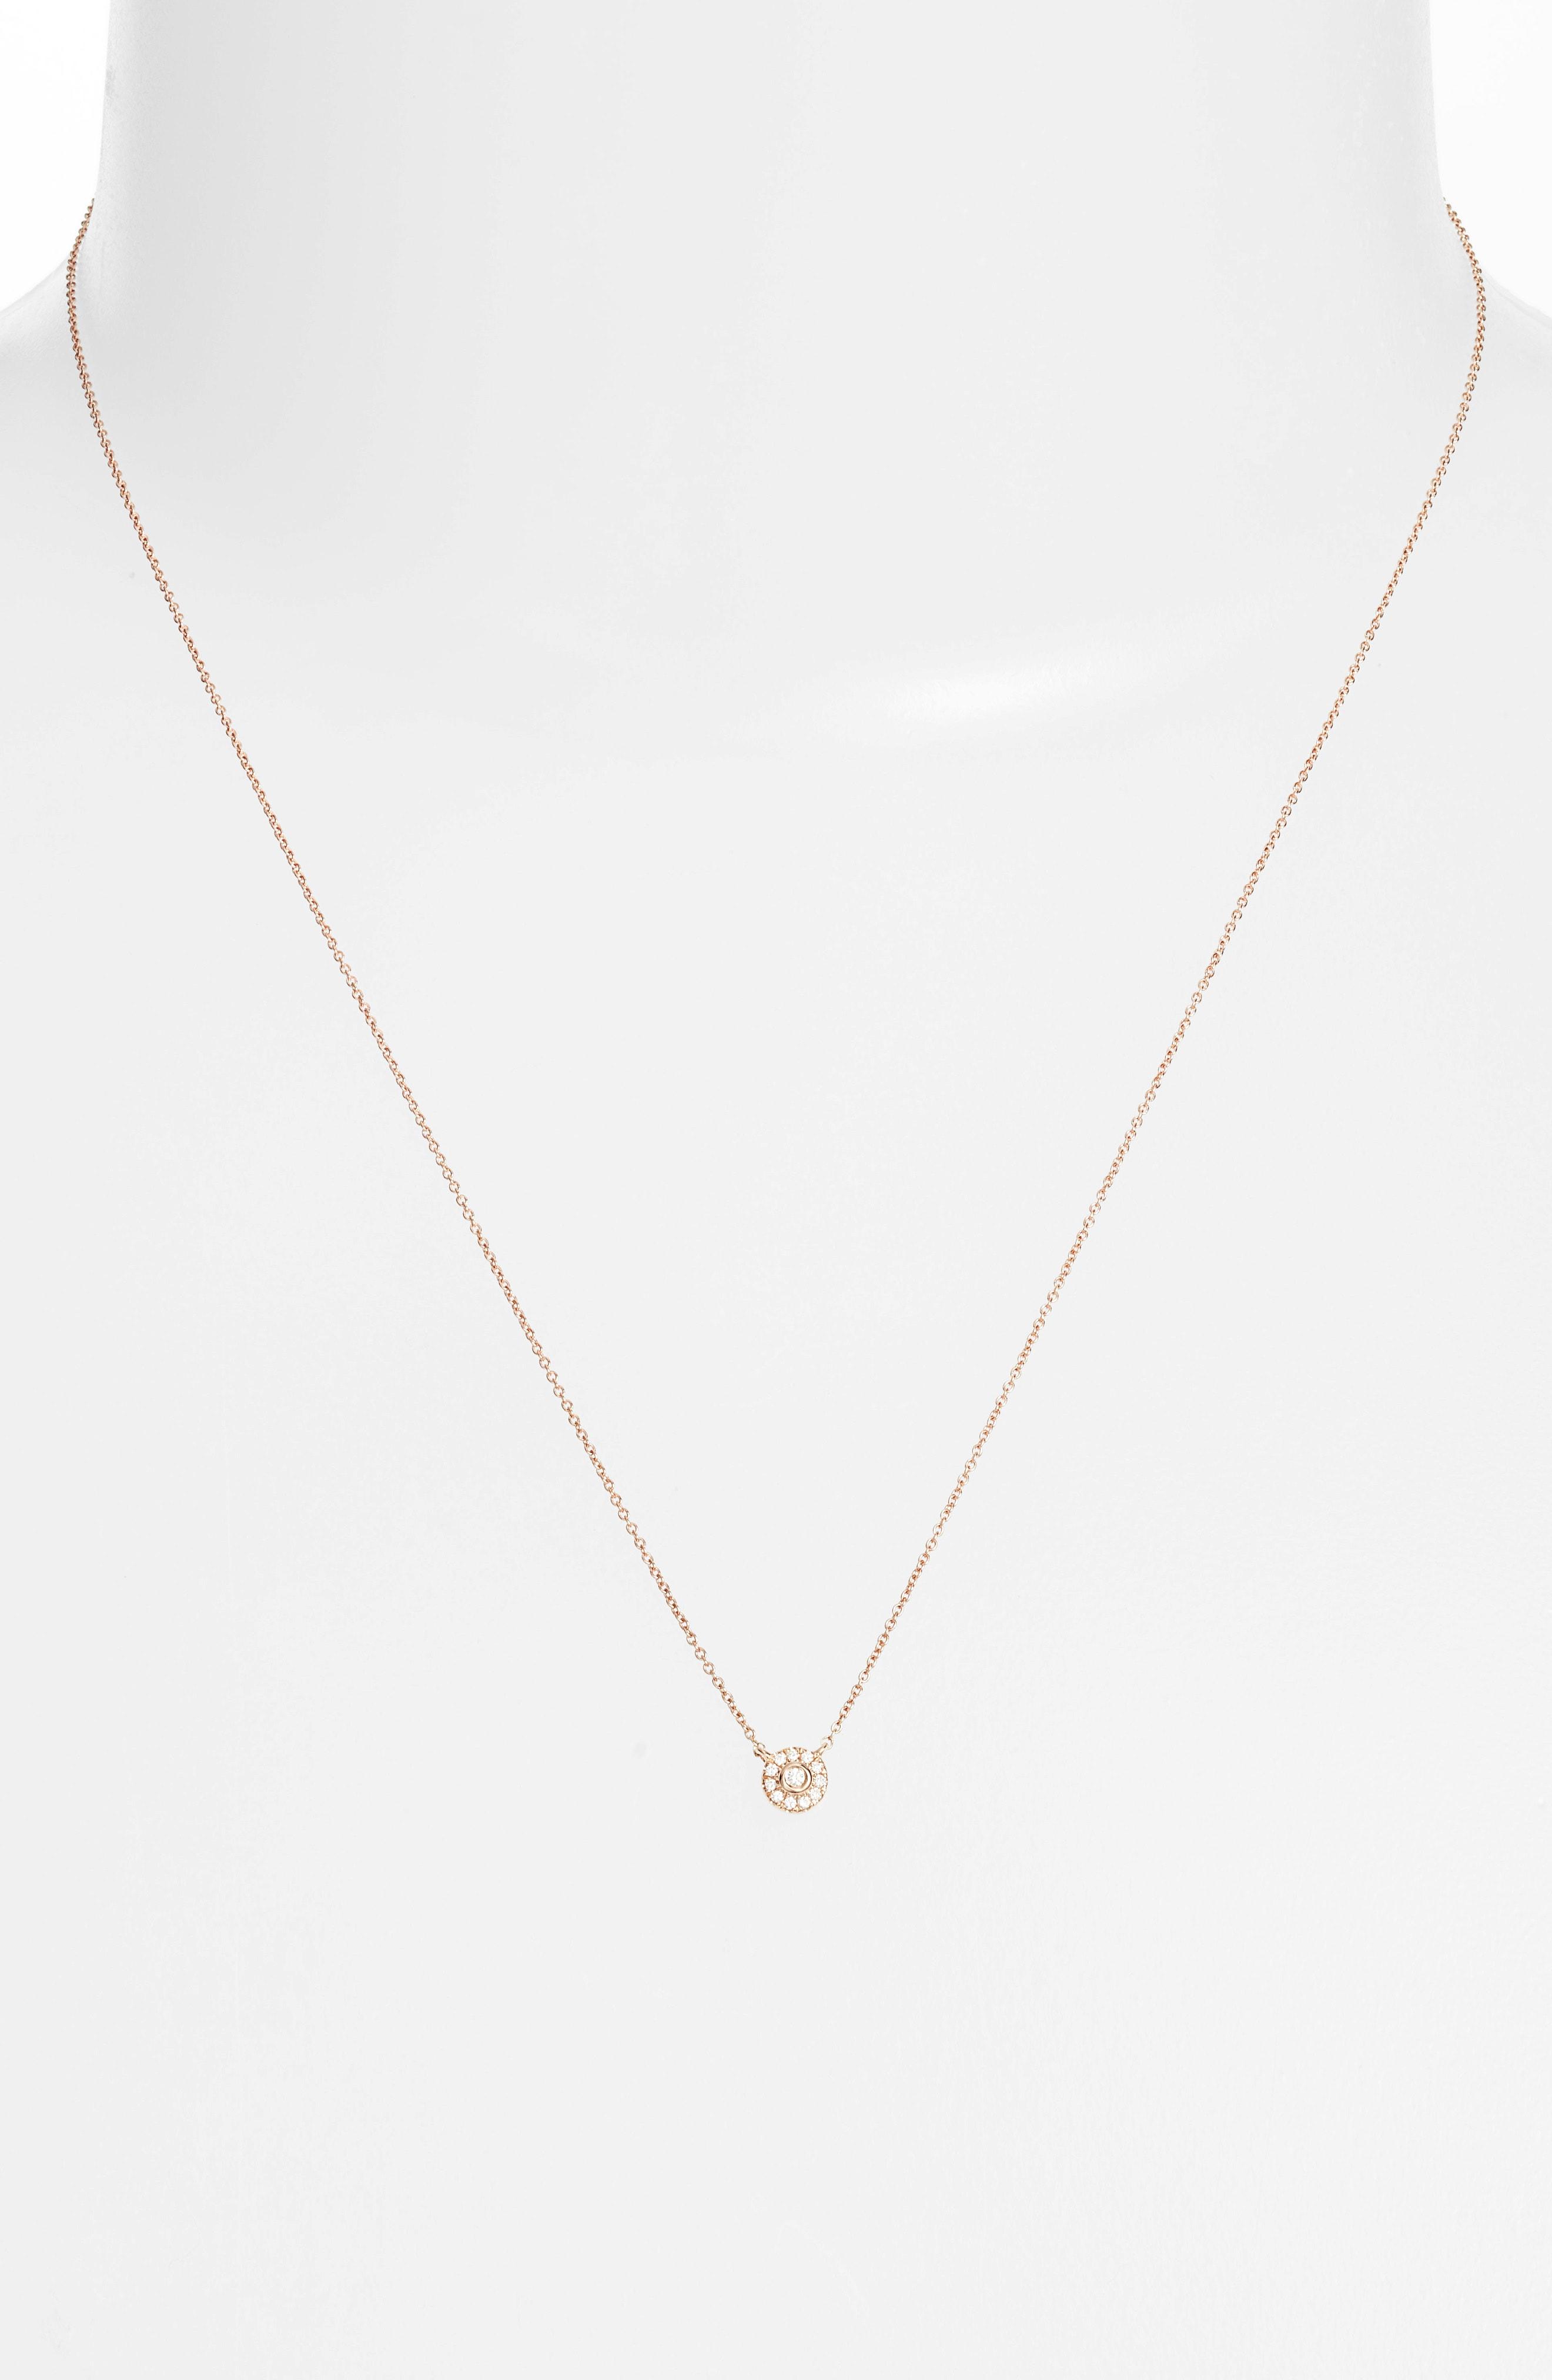 Dana Rebecca Designs Lauren Joy Mini Diamond Disc Necklace In Rose Gold ...